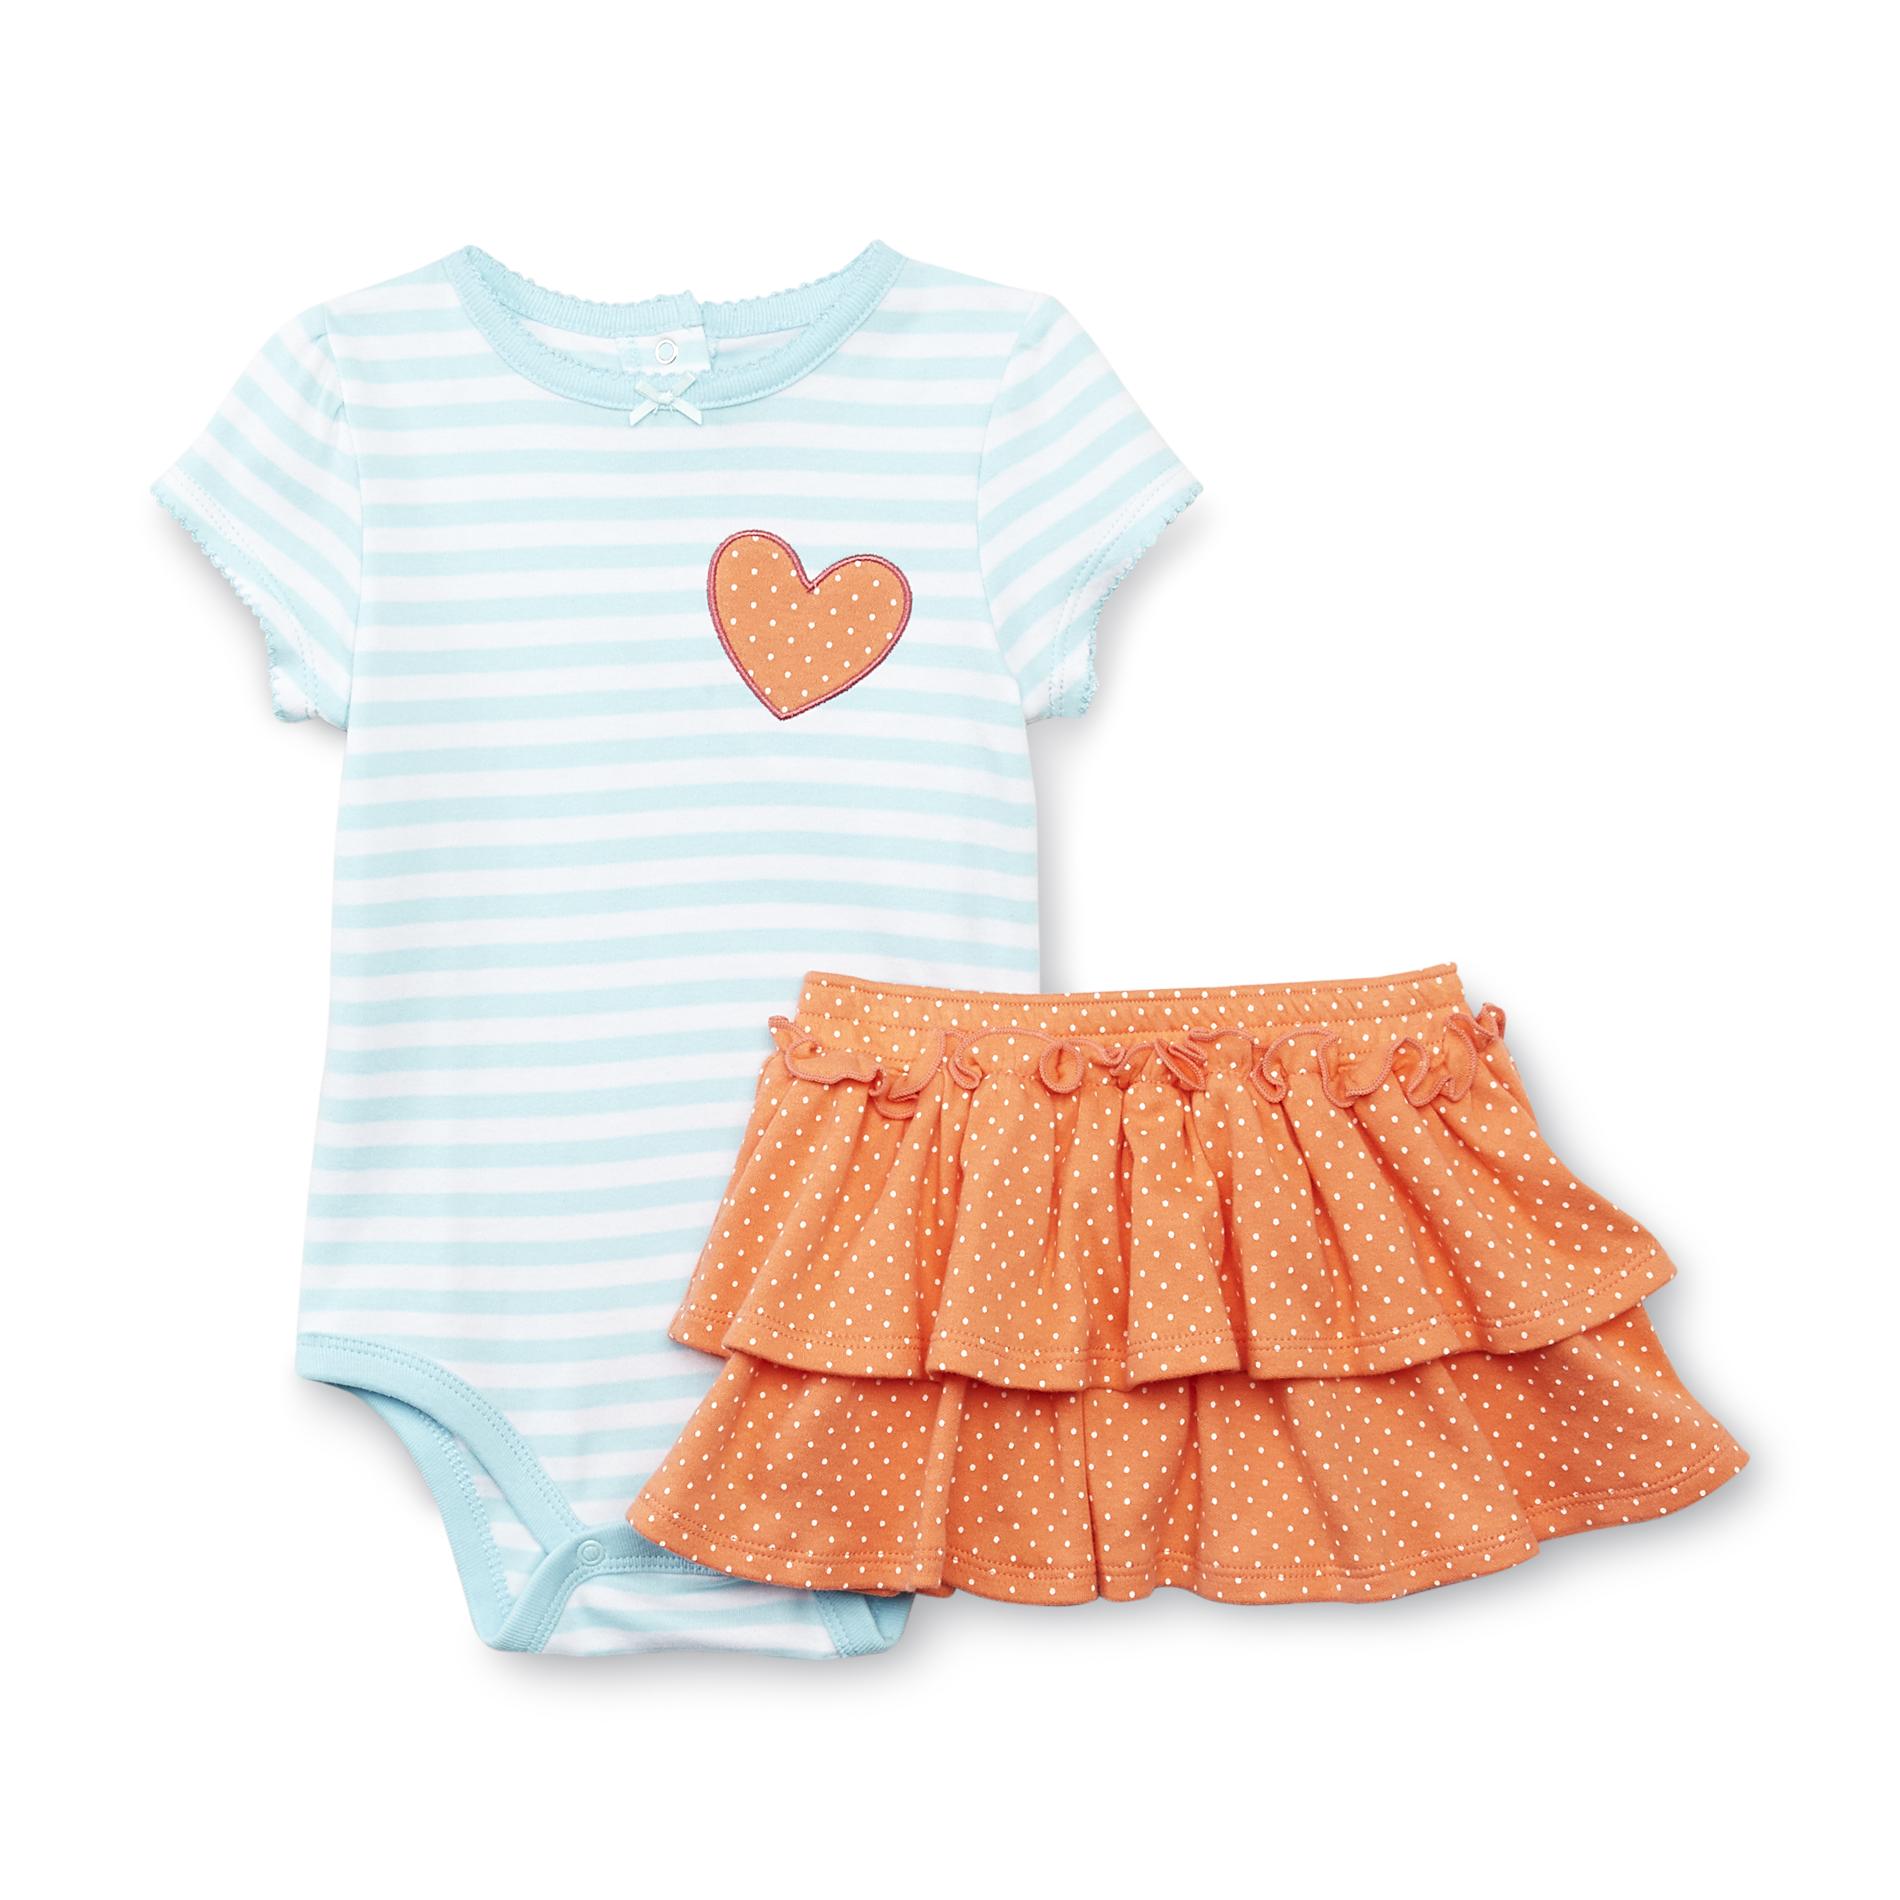 Small Wonders Newborn Girl's Bodysuit & Skirt - Striped & Polka Dots